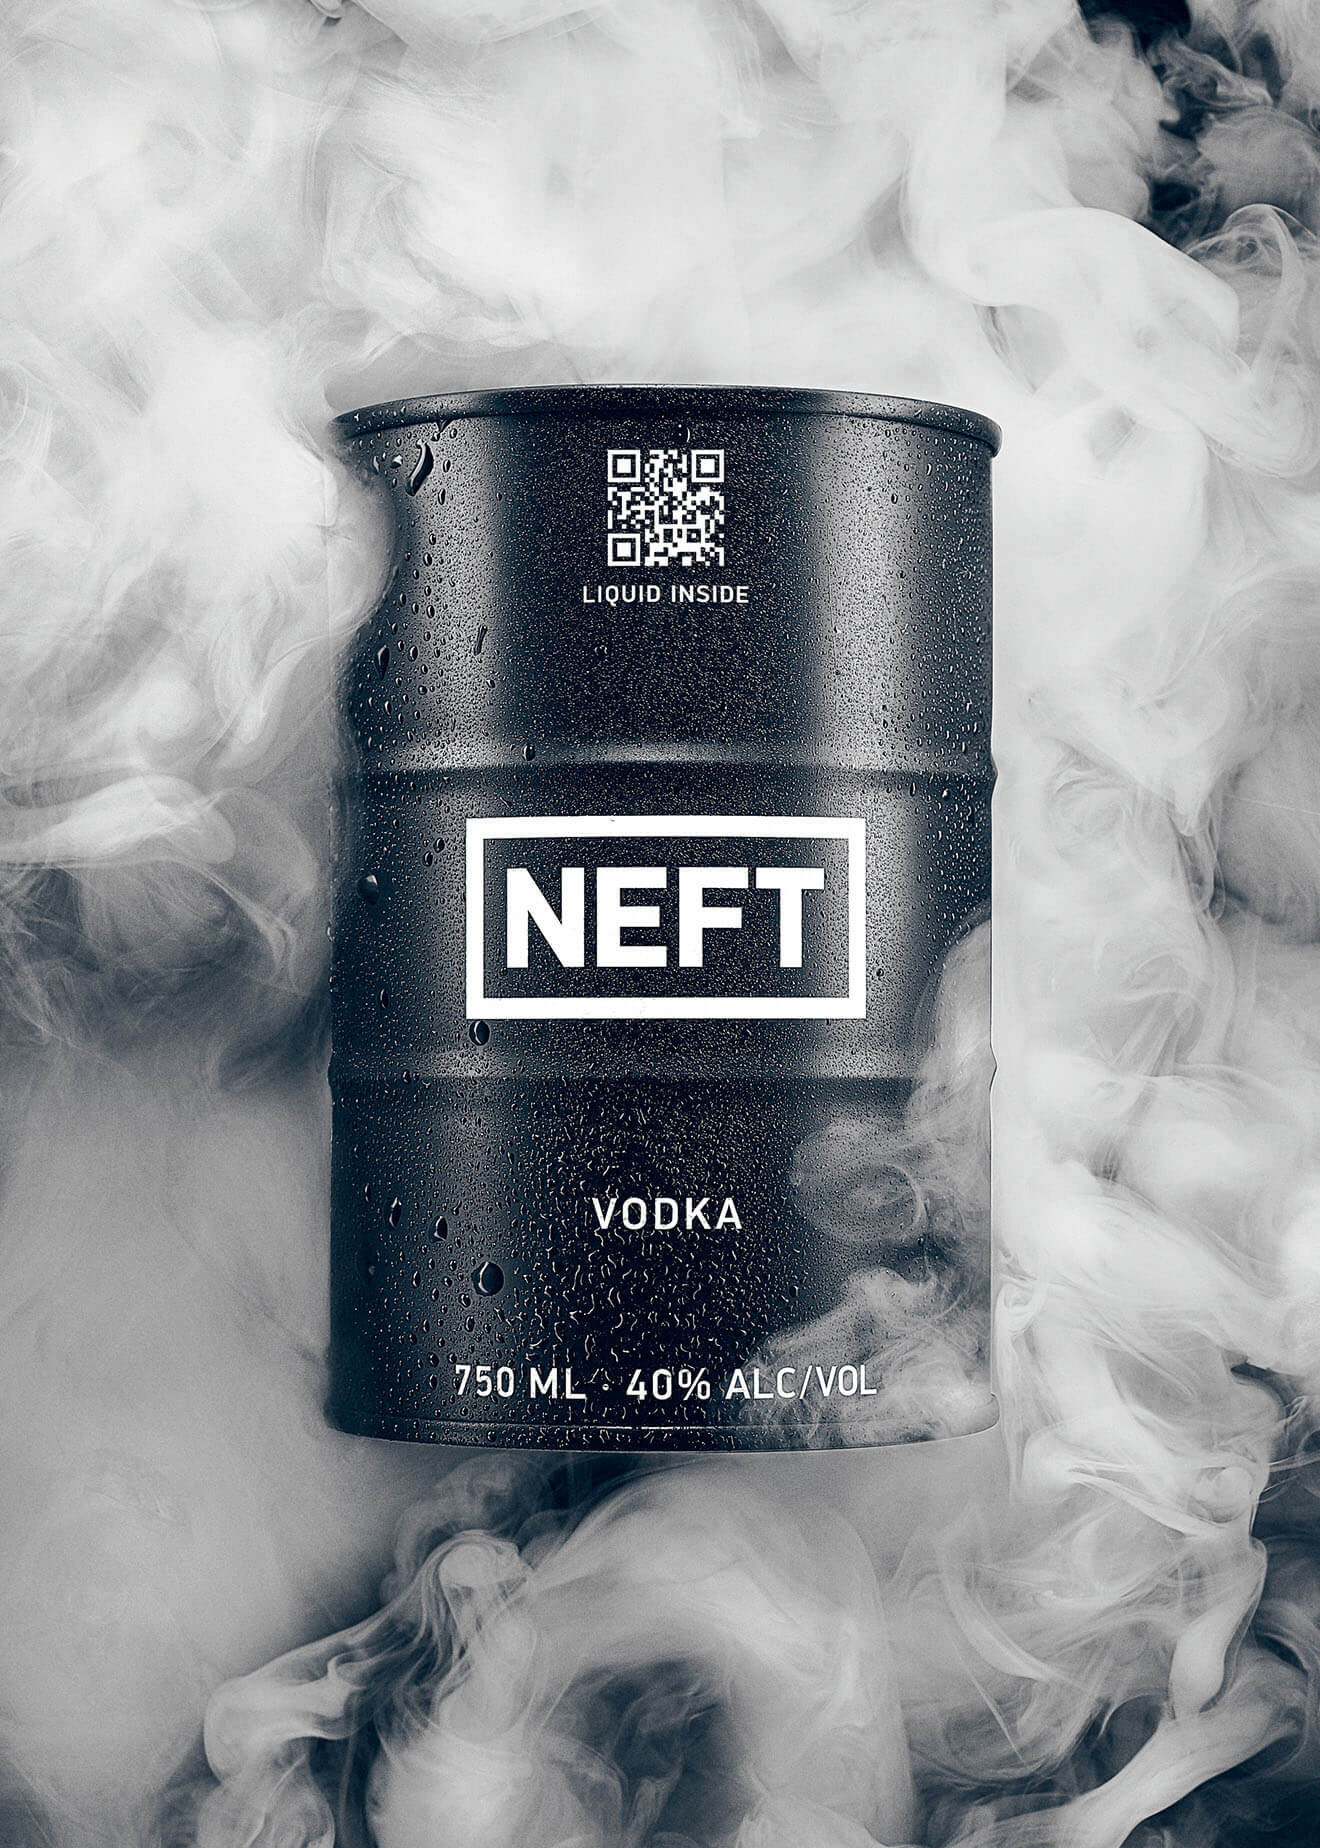 NEFT Vodka, smoke and barrel